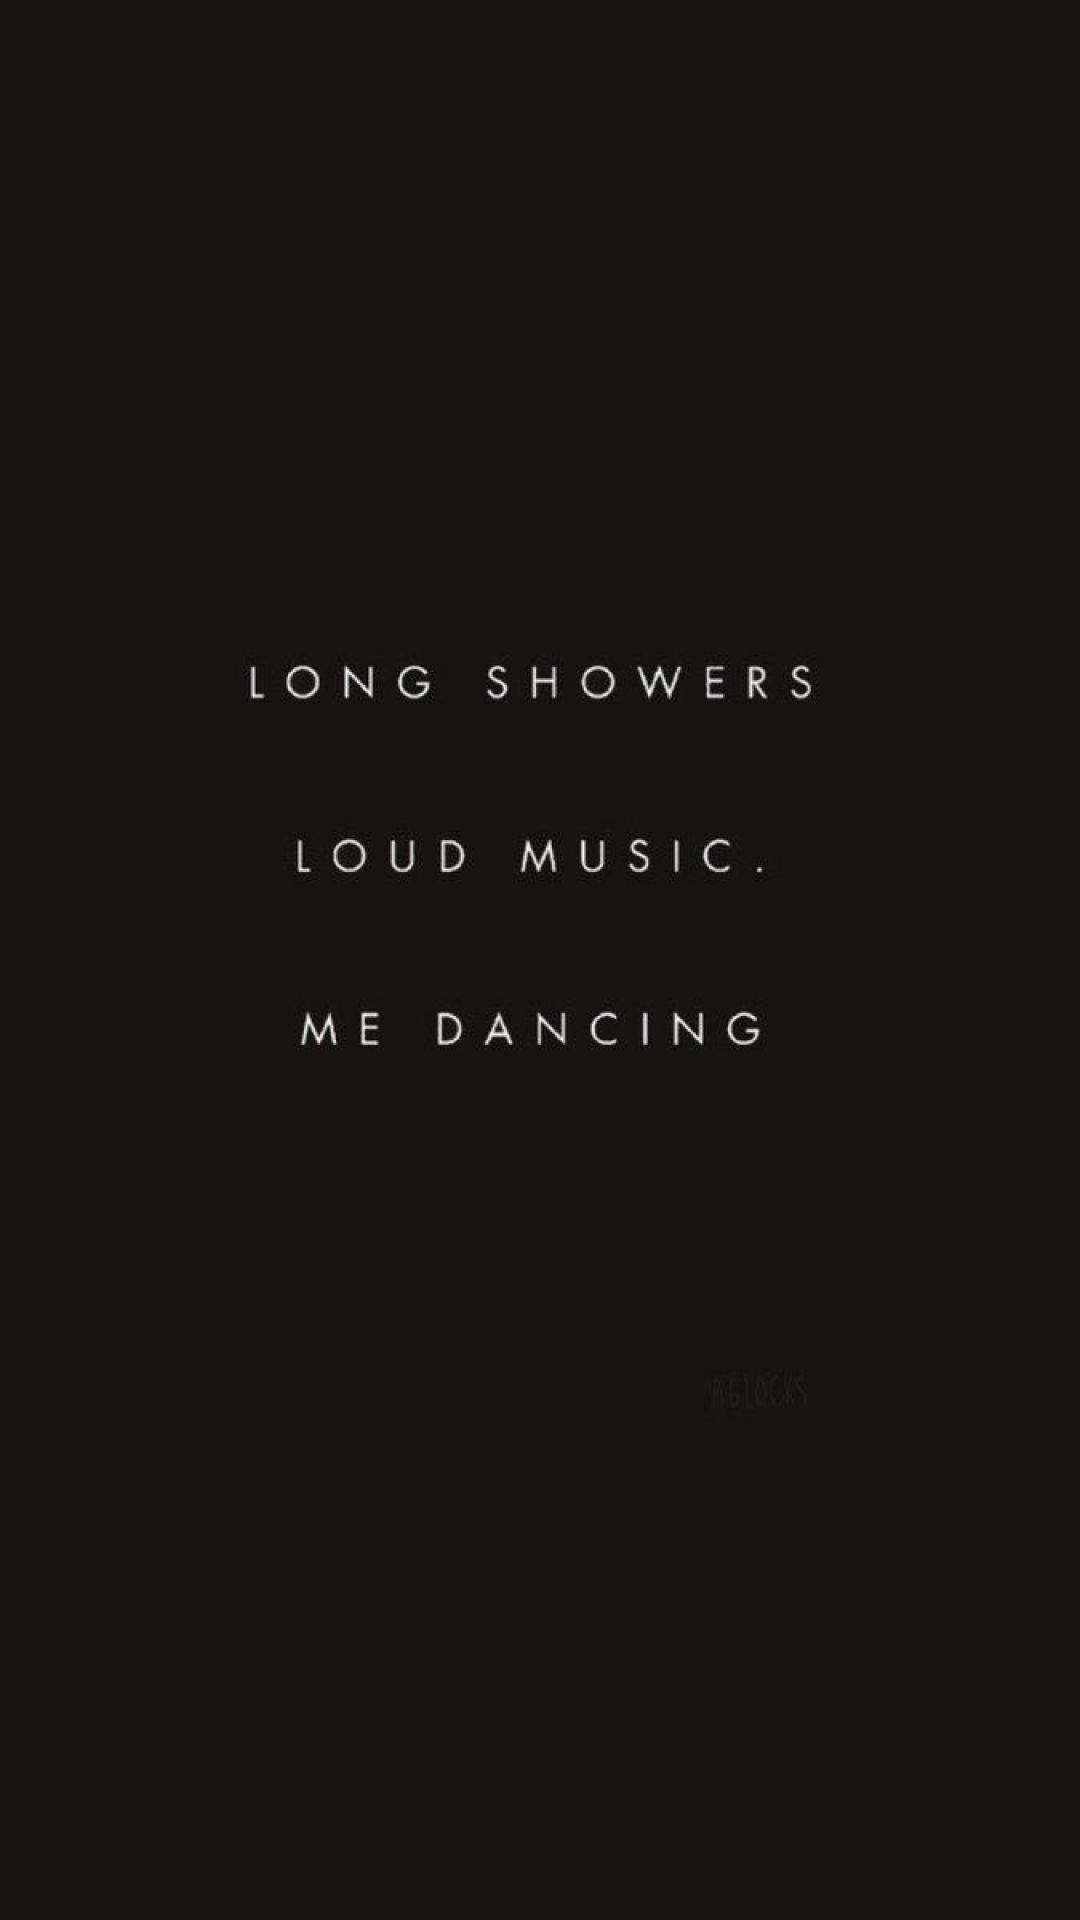 Long showers, loud music me dancing - Music